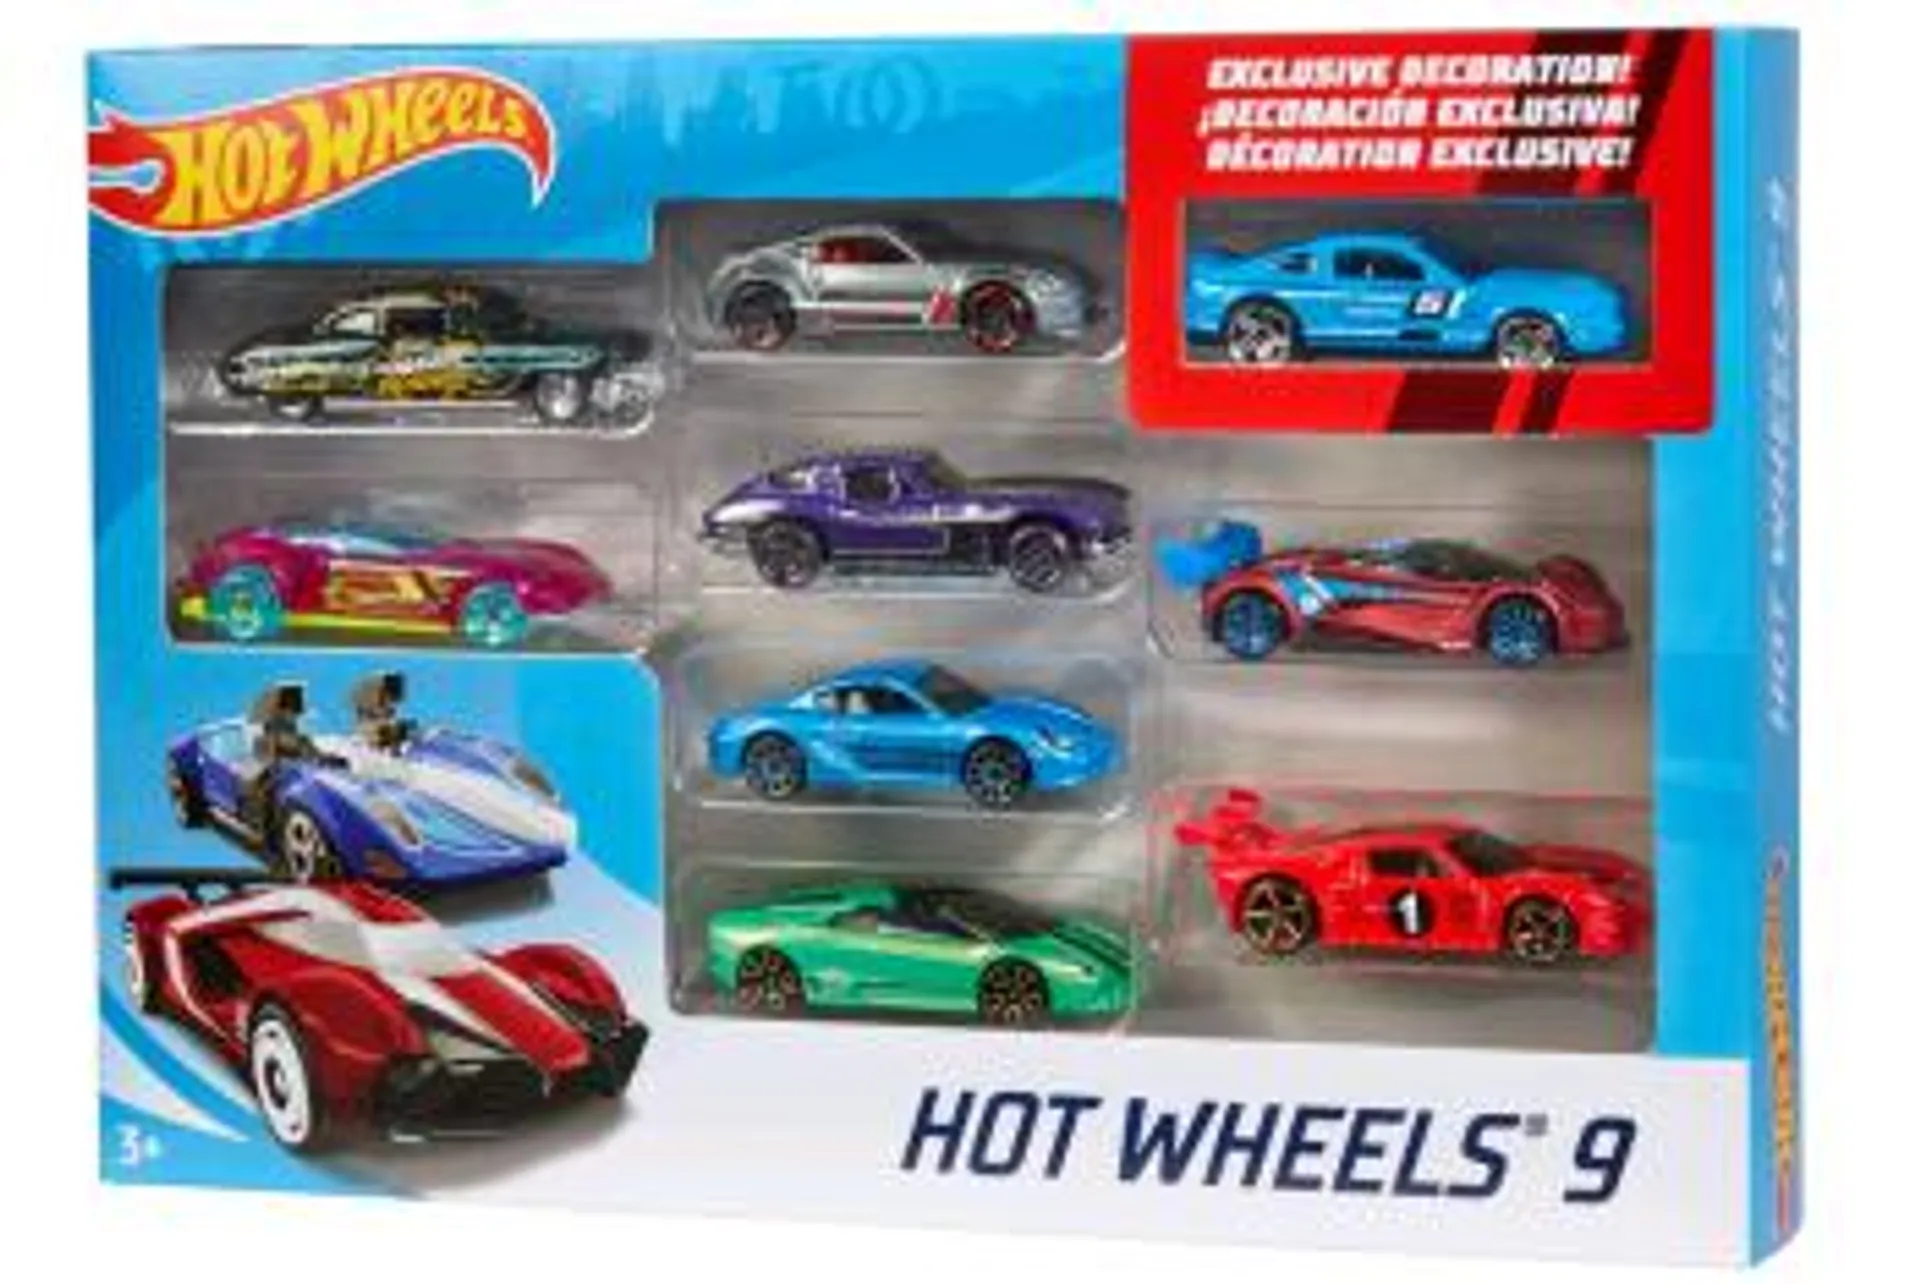 Hot Wheels - Basic Cars - 9 Pack